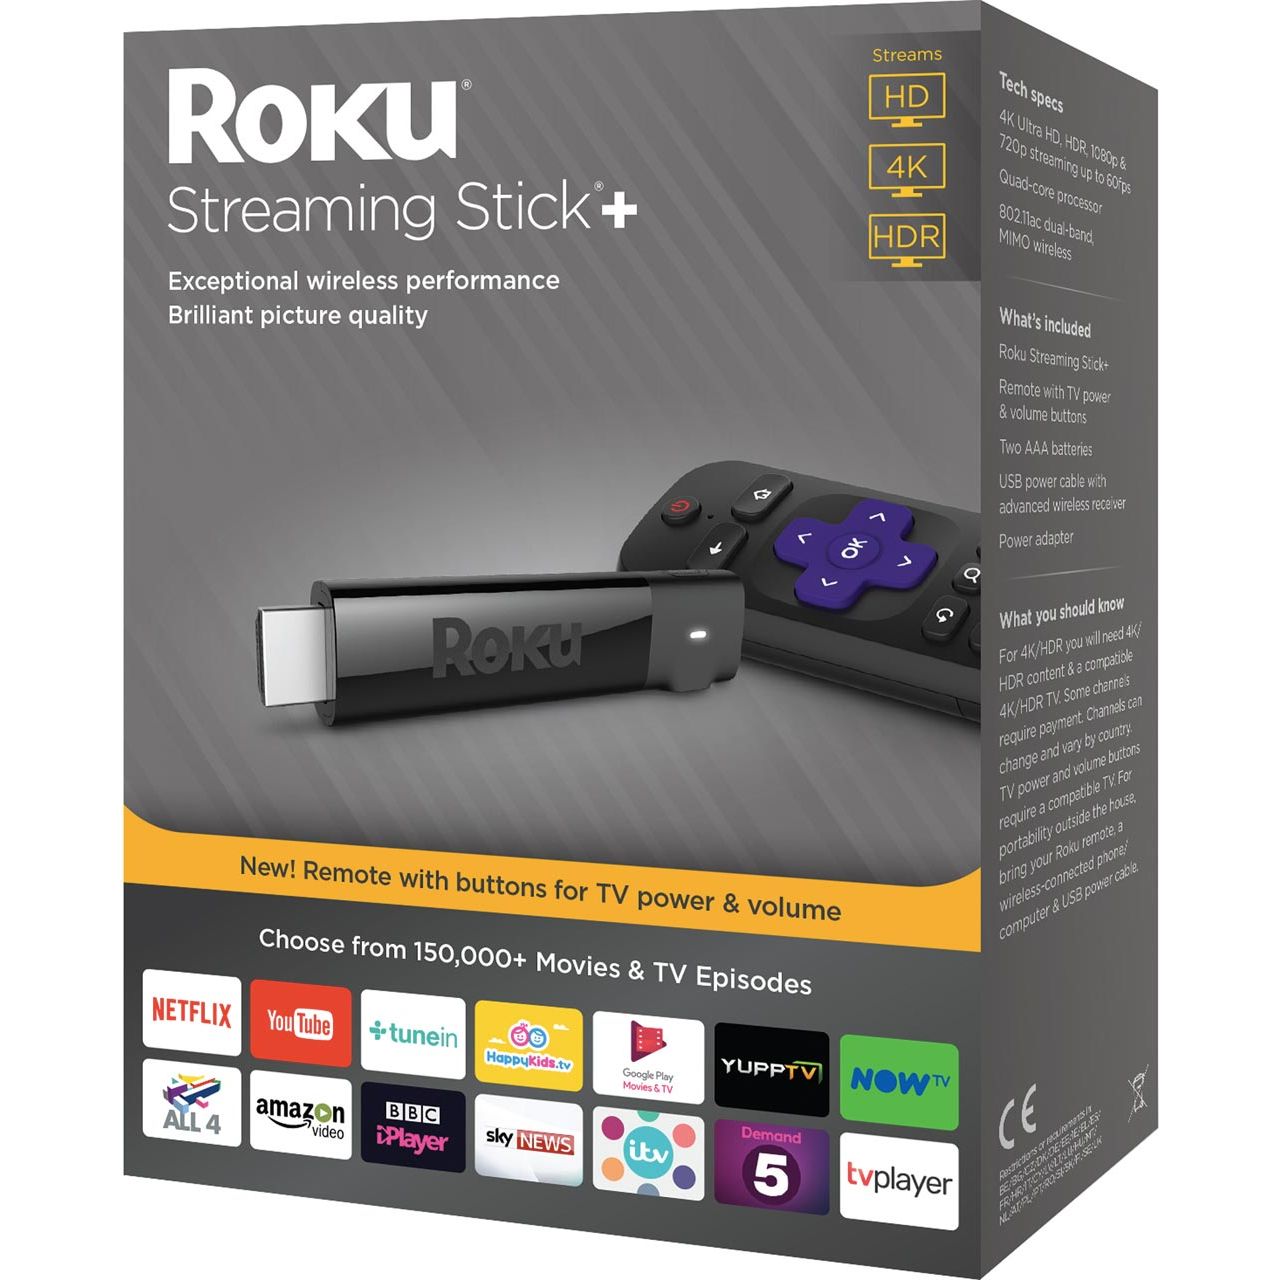 Roku Streaming Stick+ Review